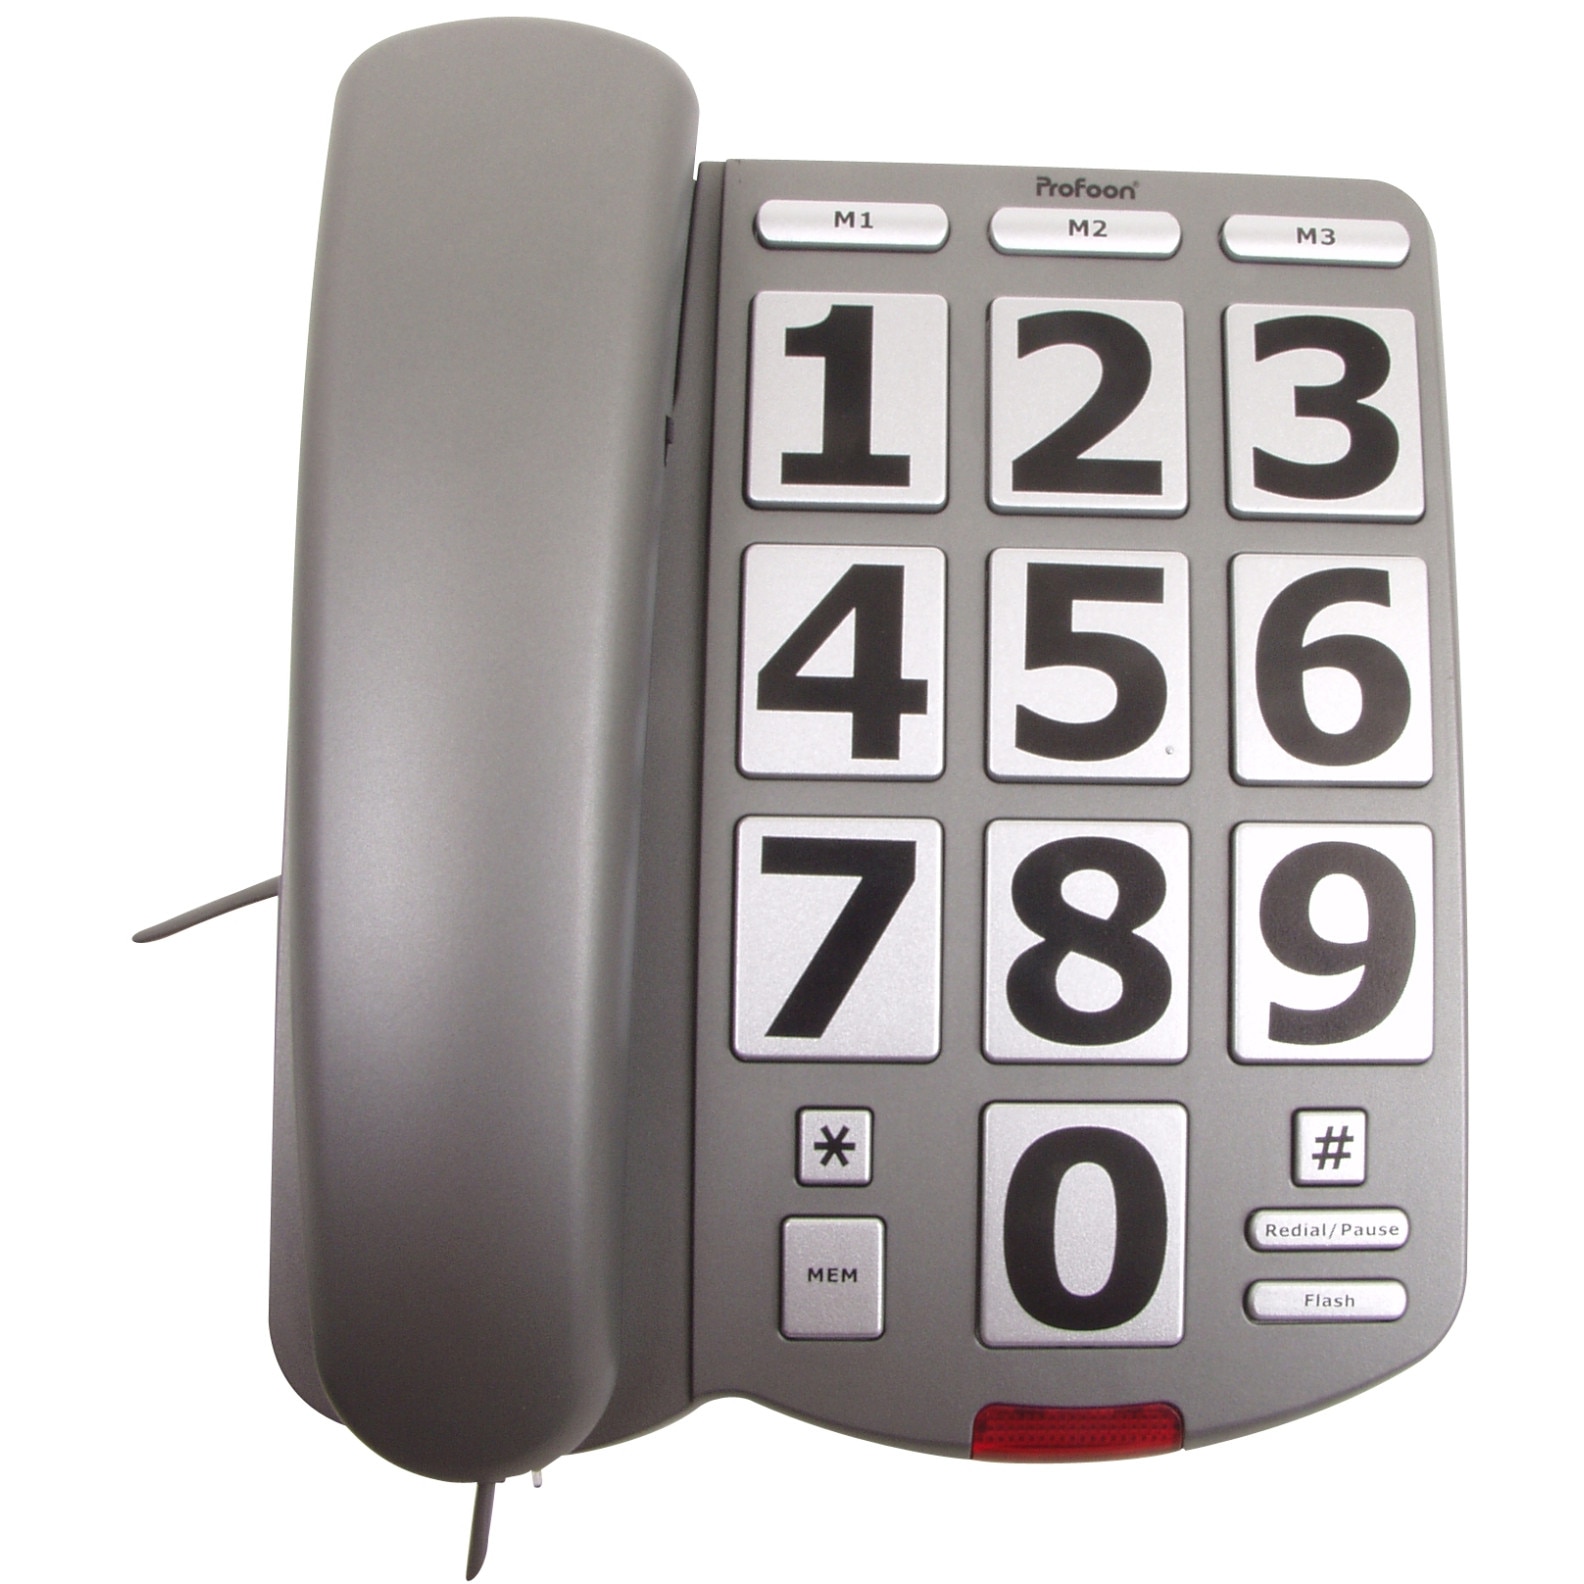 Recall whip Season Telefon fix pentru Seniori Profoon, Butoane mari si avertizare luminoasa -  eMAG.ro